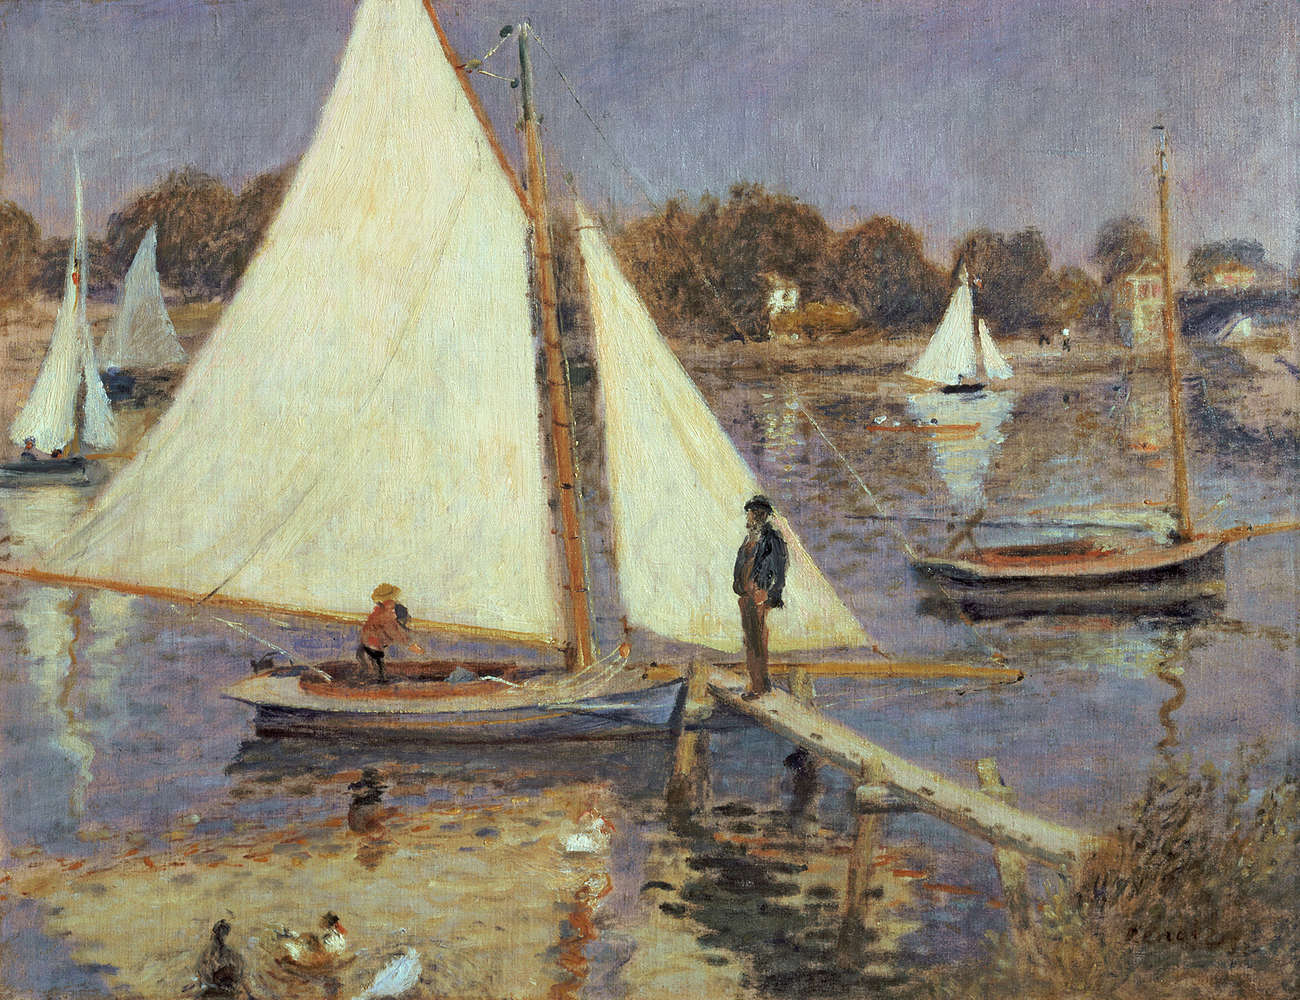             Photo wallpaper "The Seine at Argenteuil" by Pierre Auguste Renoir
        